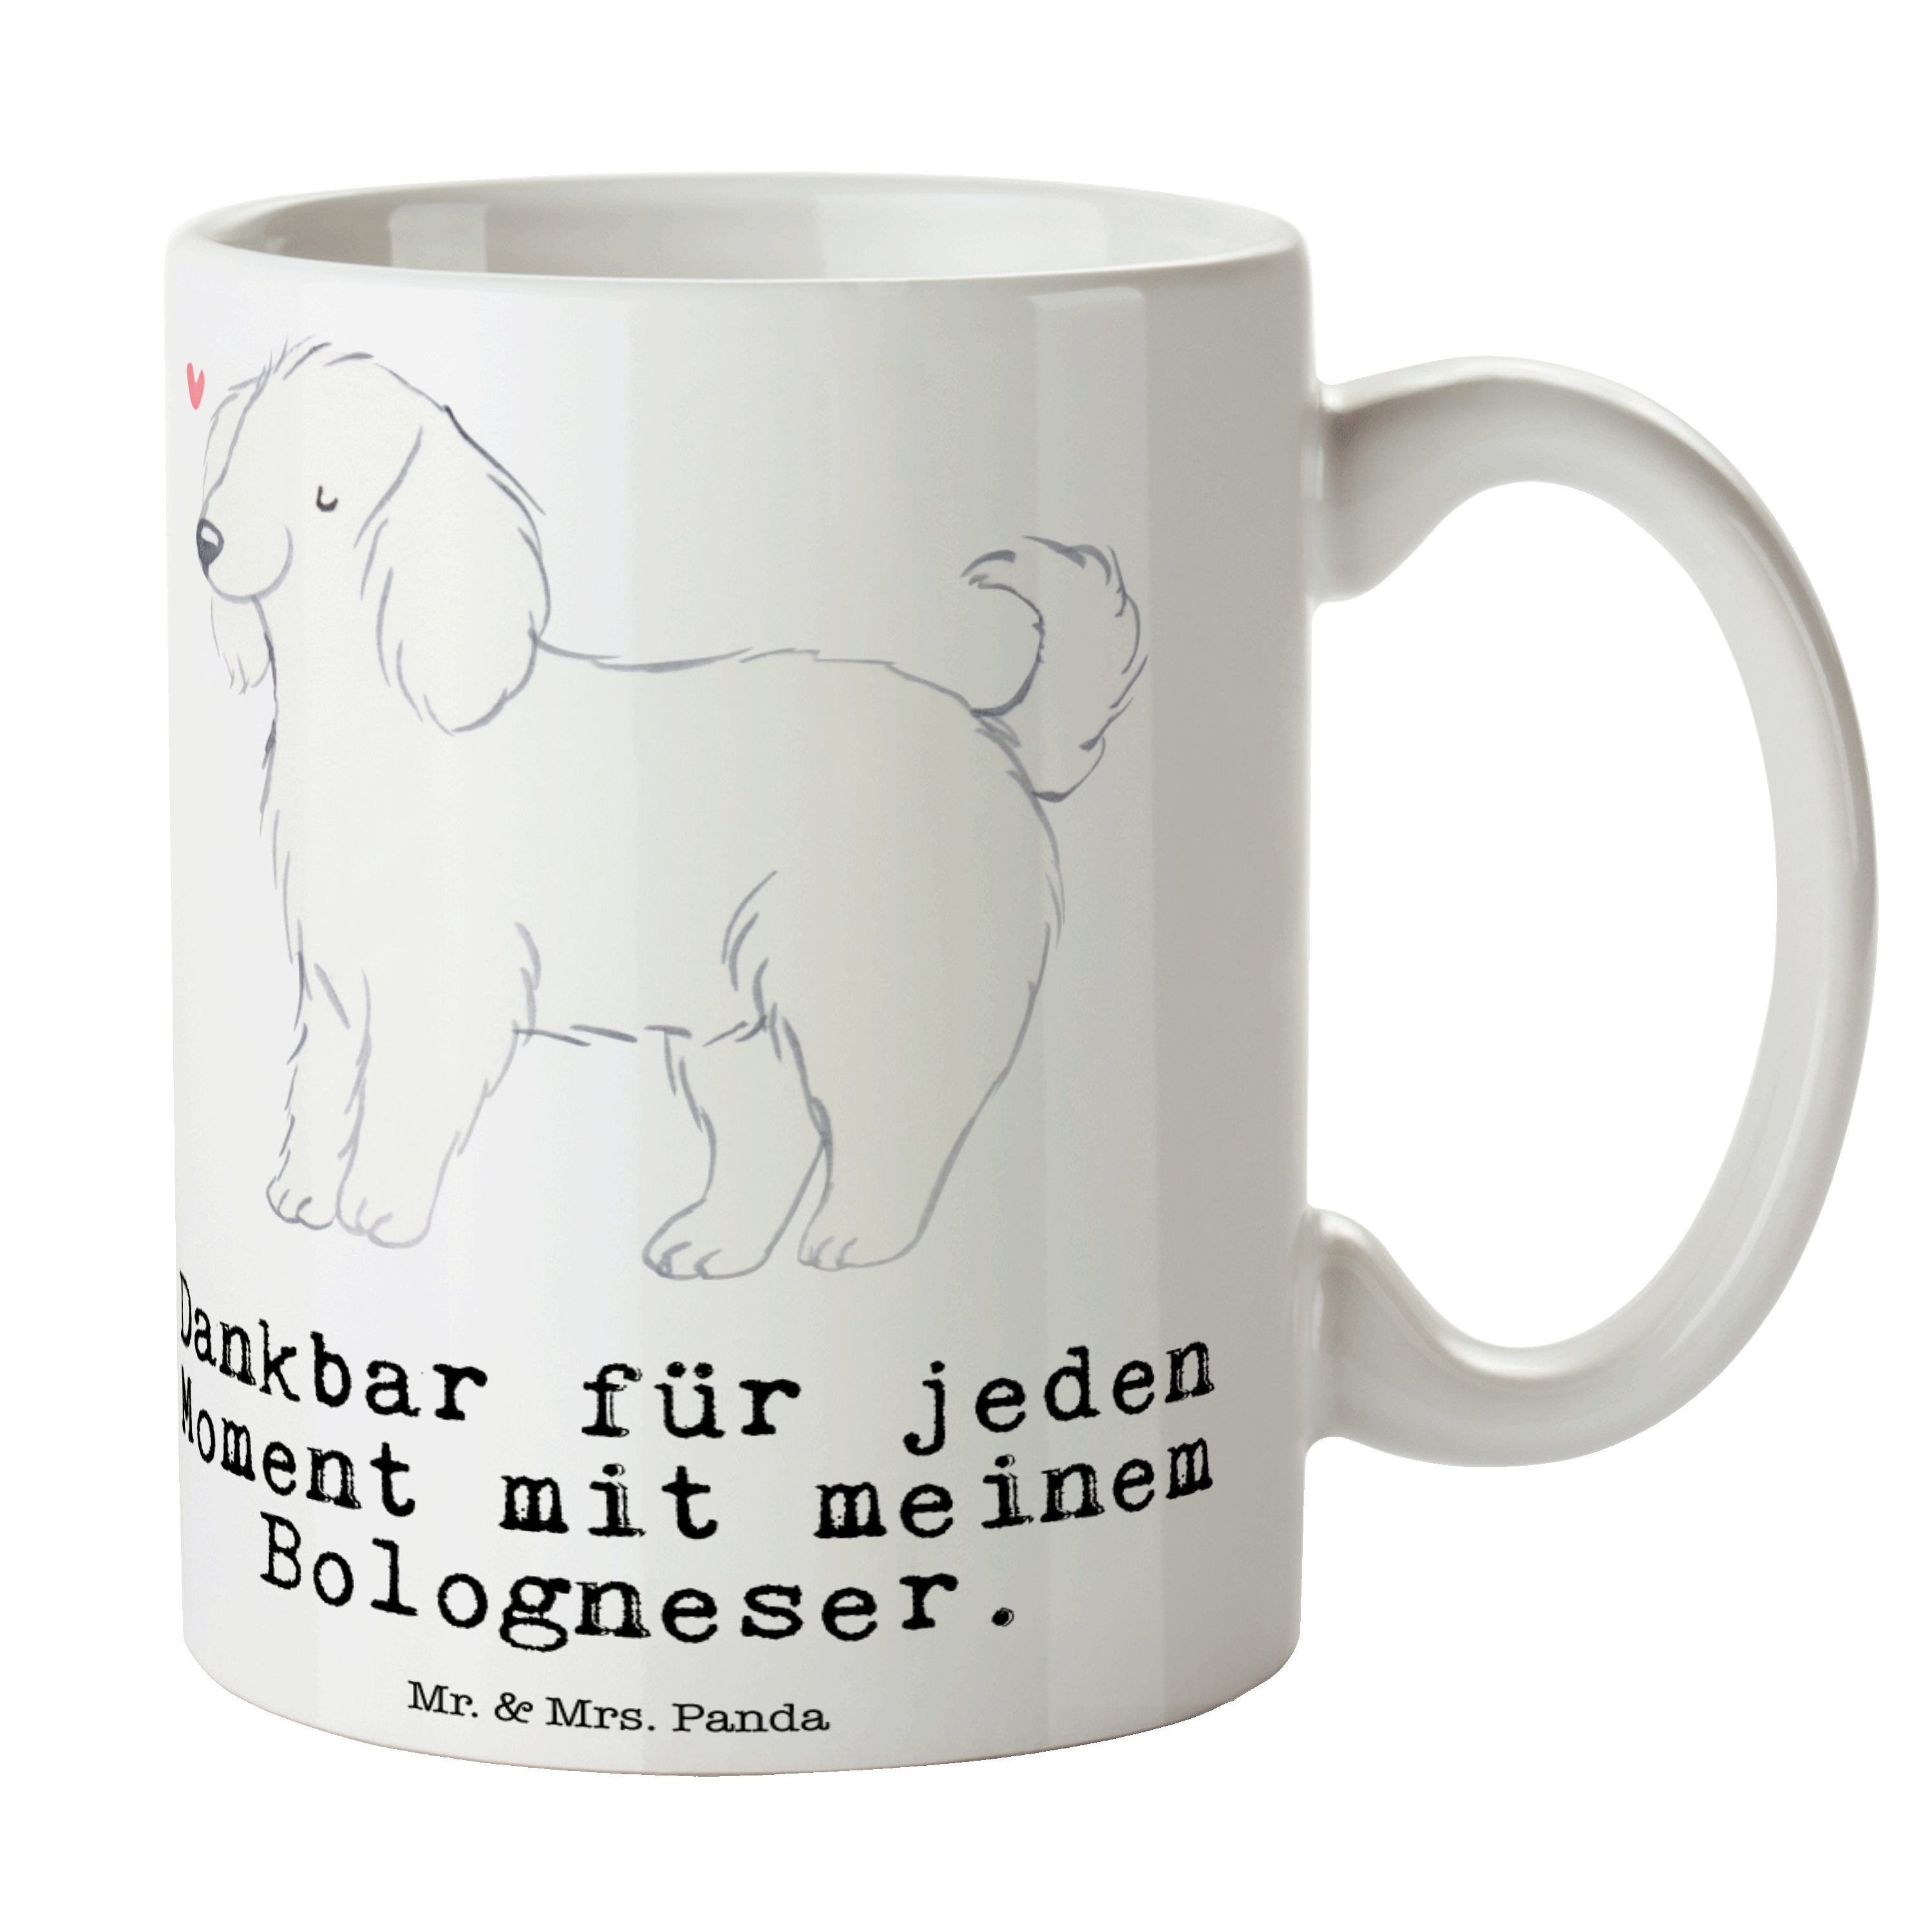 Mr. & Mrs. Panda Tasse Bologneser Moment - Weiß - Geschenk, Kaffeetasse, Tasse, Tasse Sprüch, Keramik